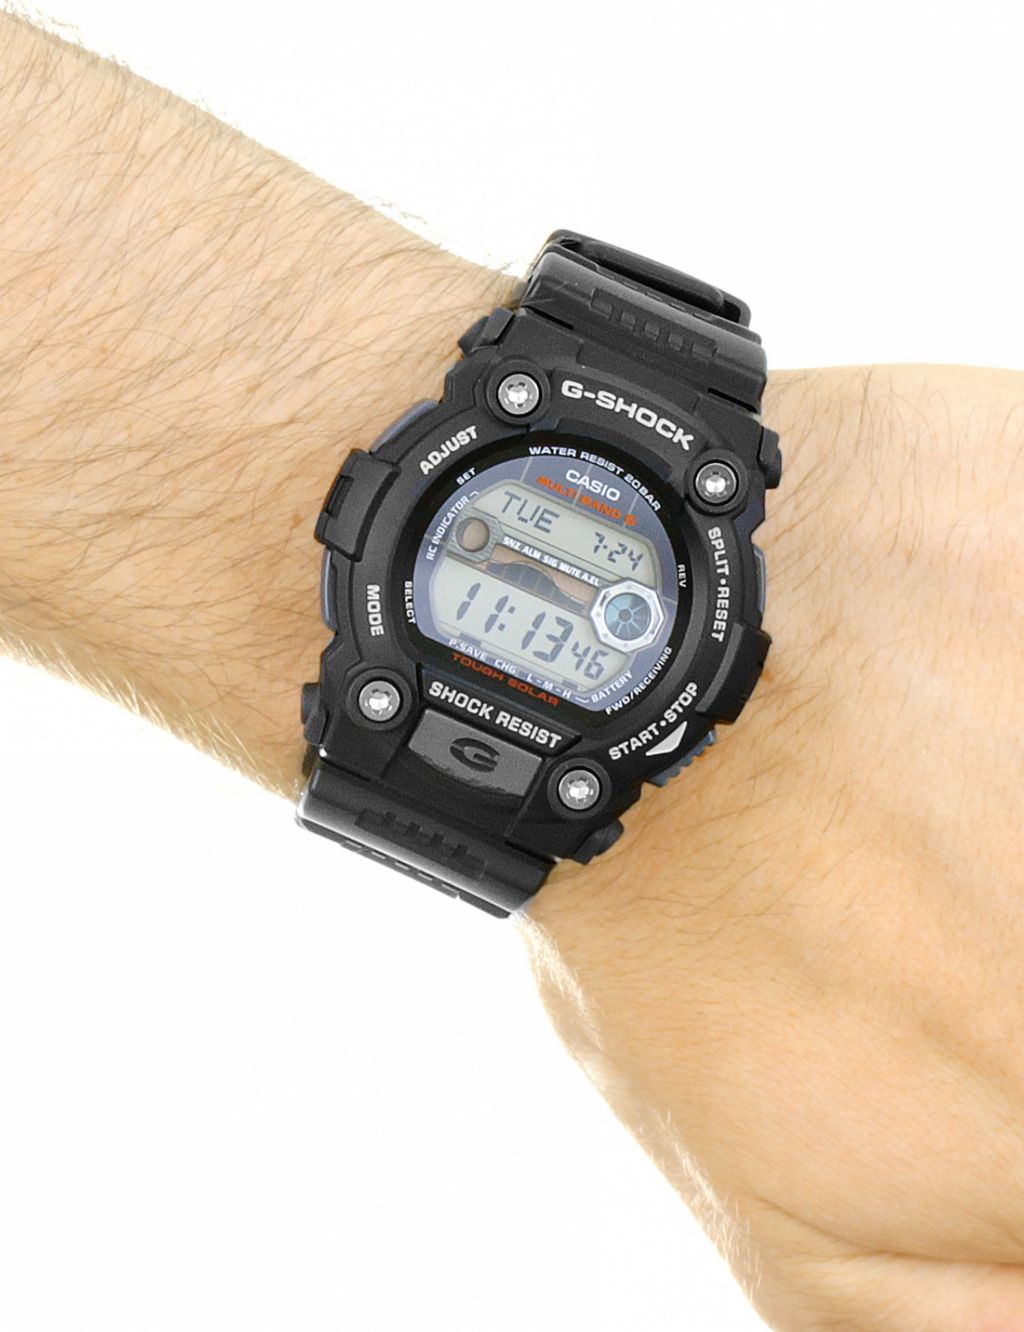 Casio G-Shock Waterproof Chronograph Watch 4 of 4